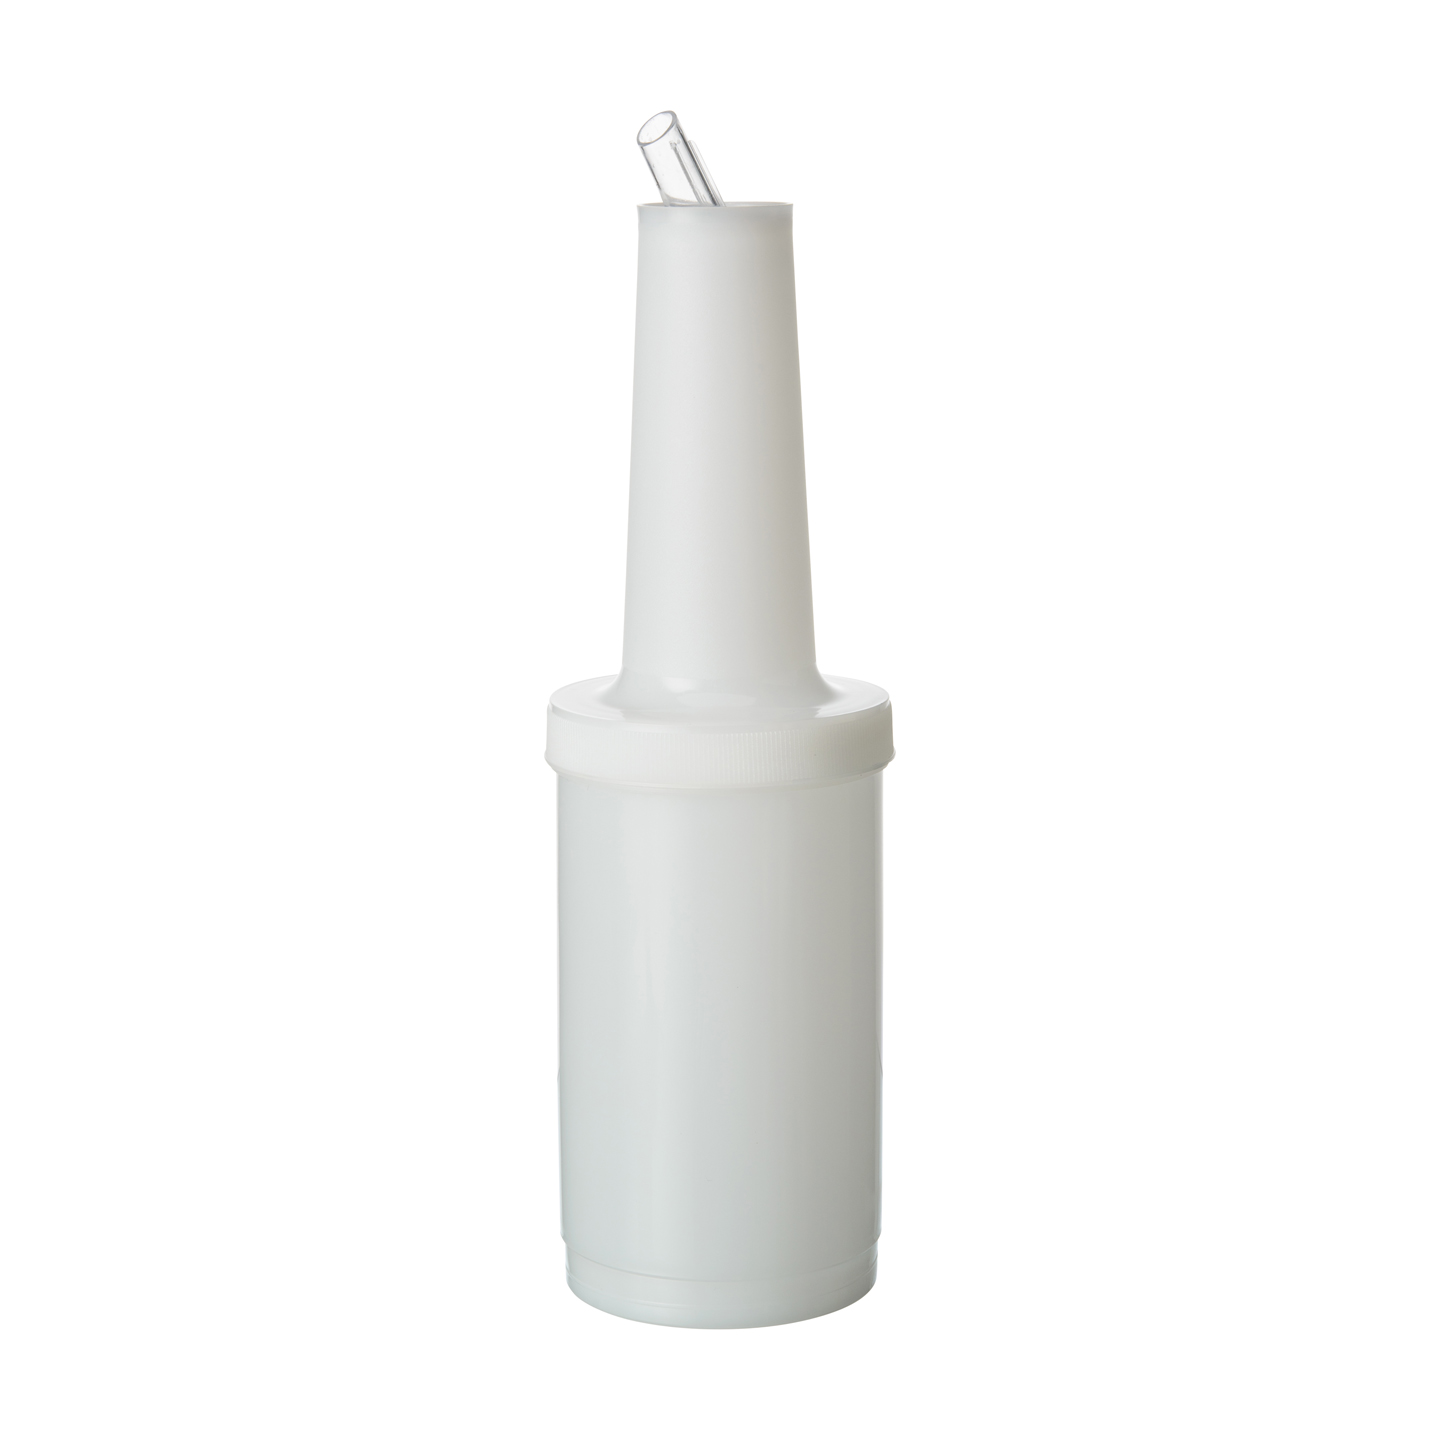 Mikseri-/mehupullo muovi 1L valkoinen